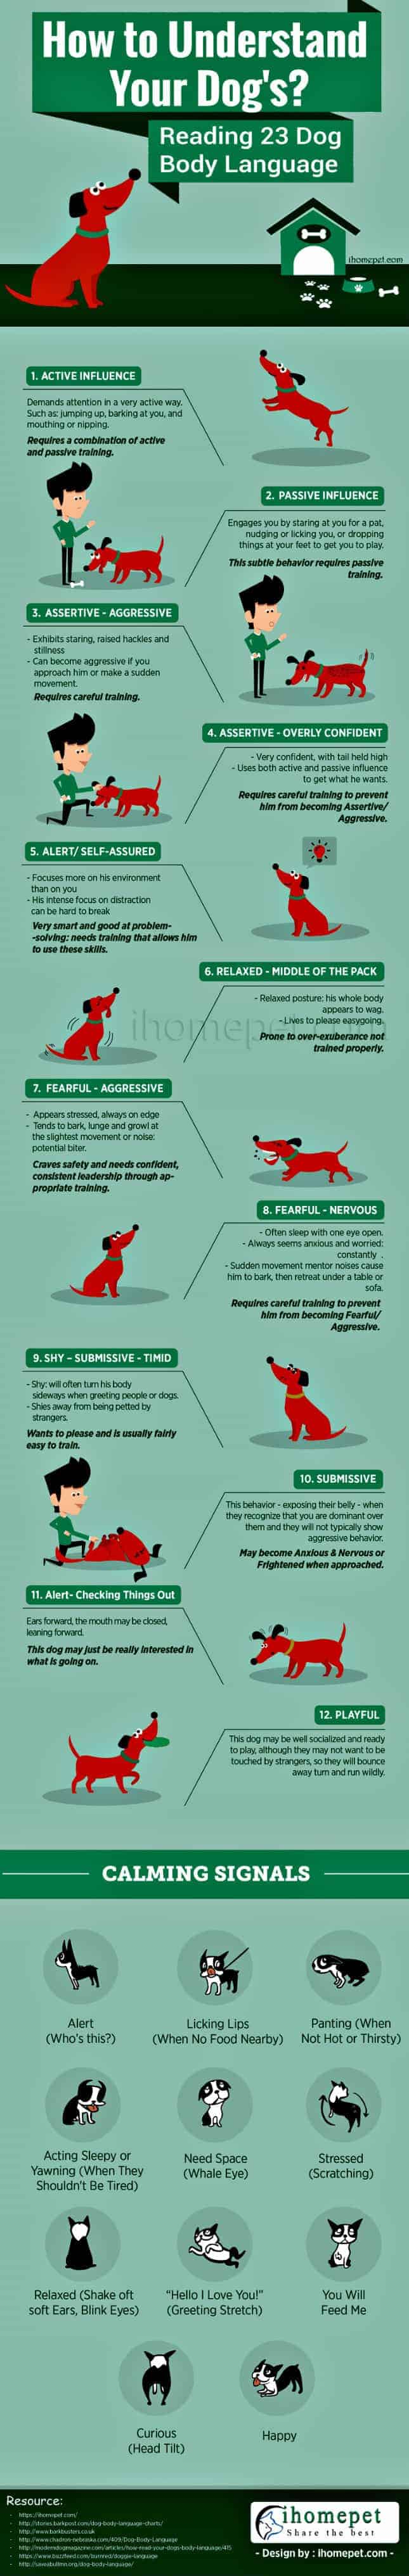 dog body language infographic